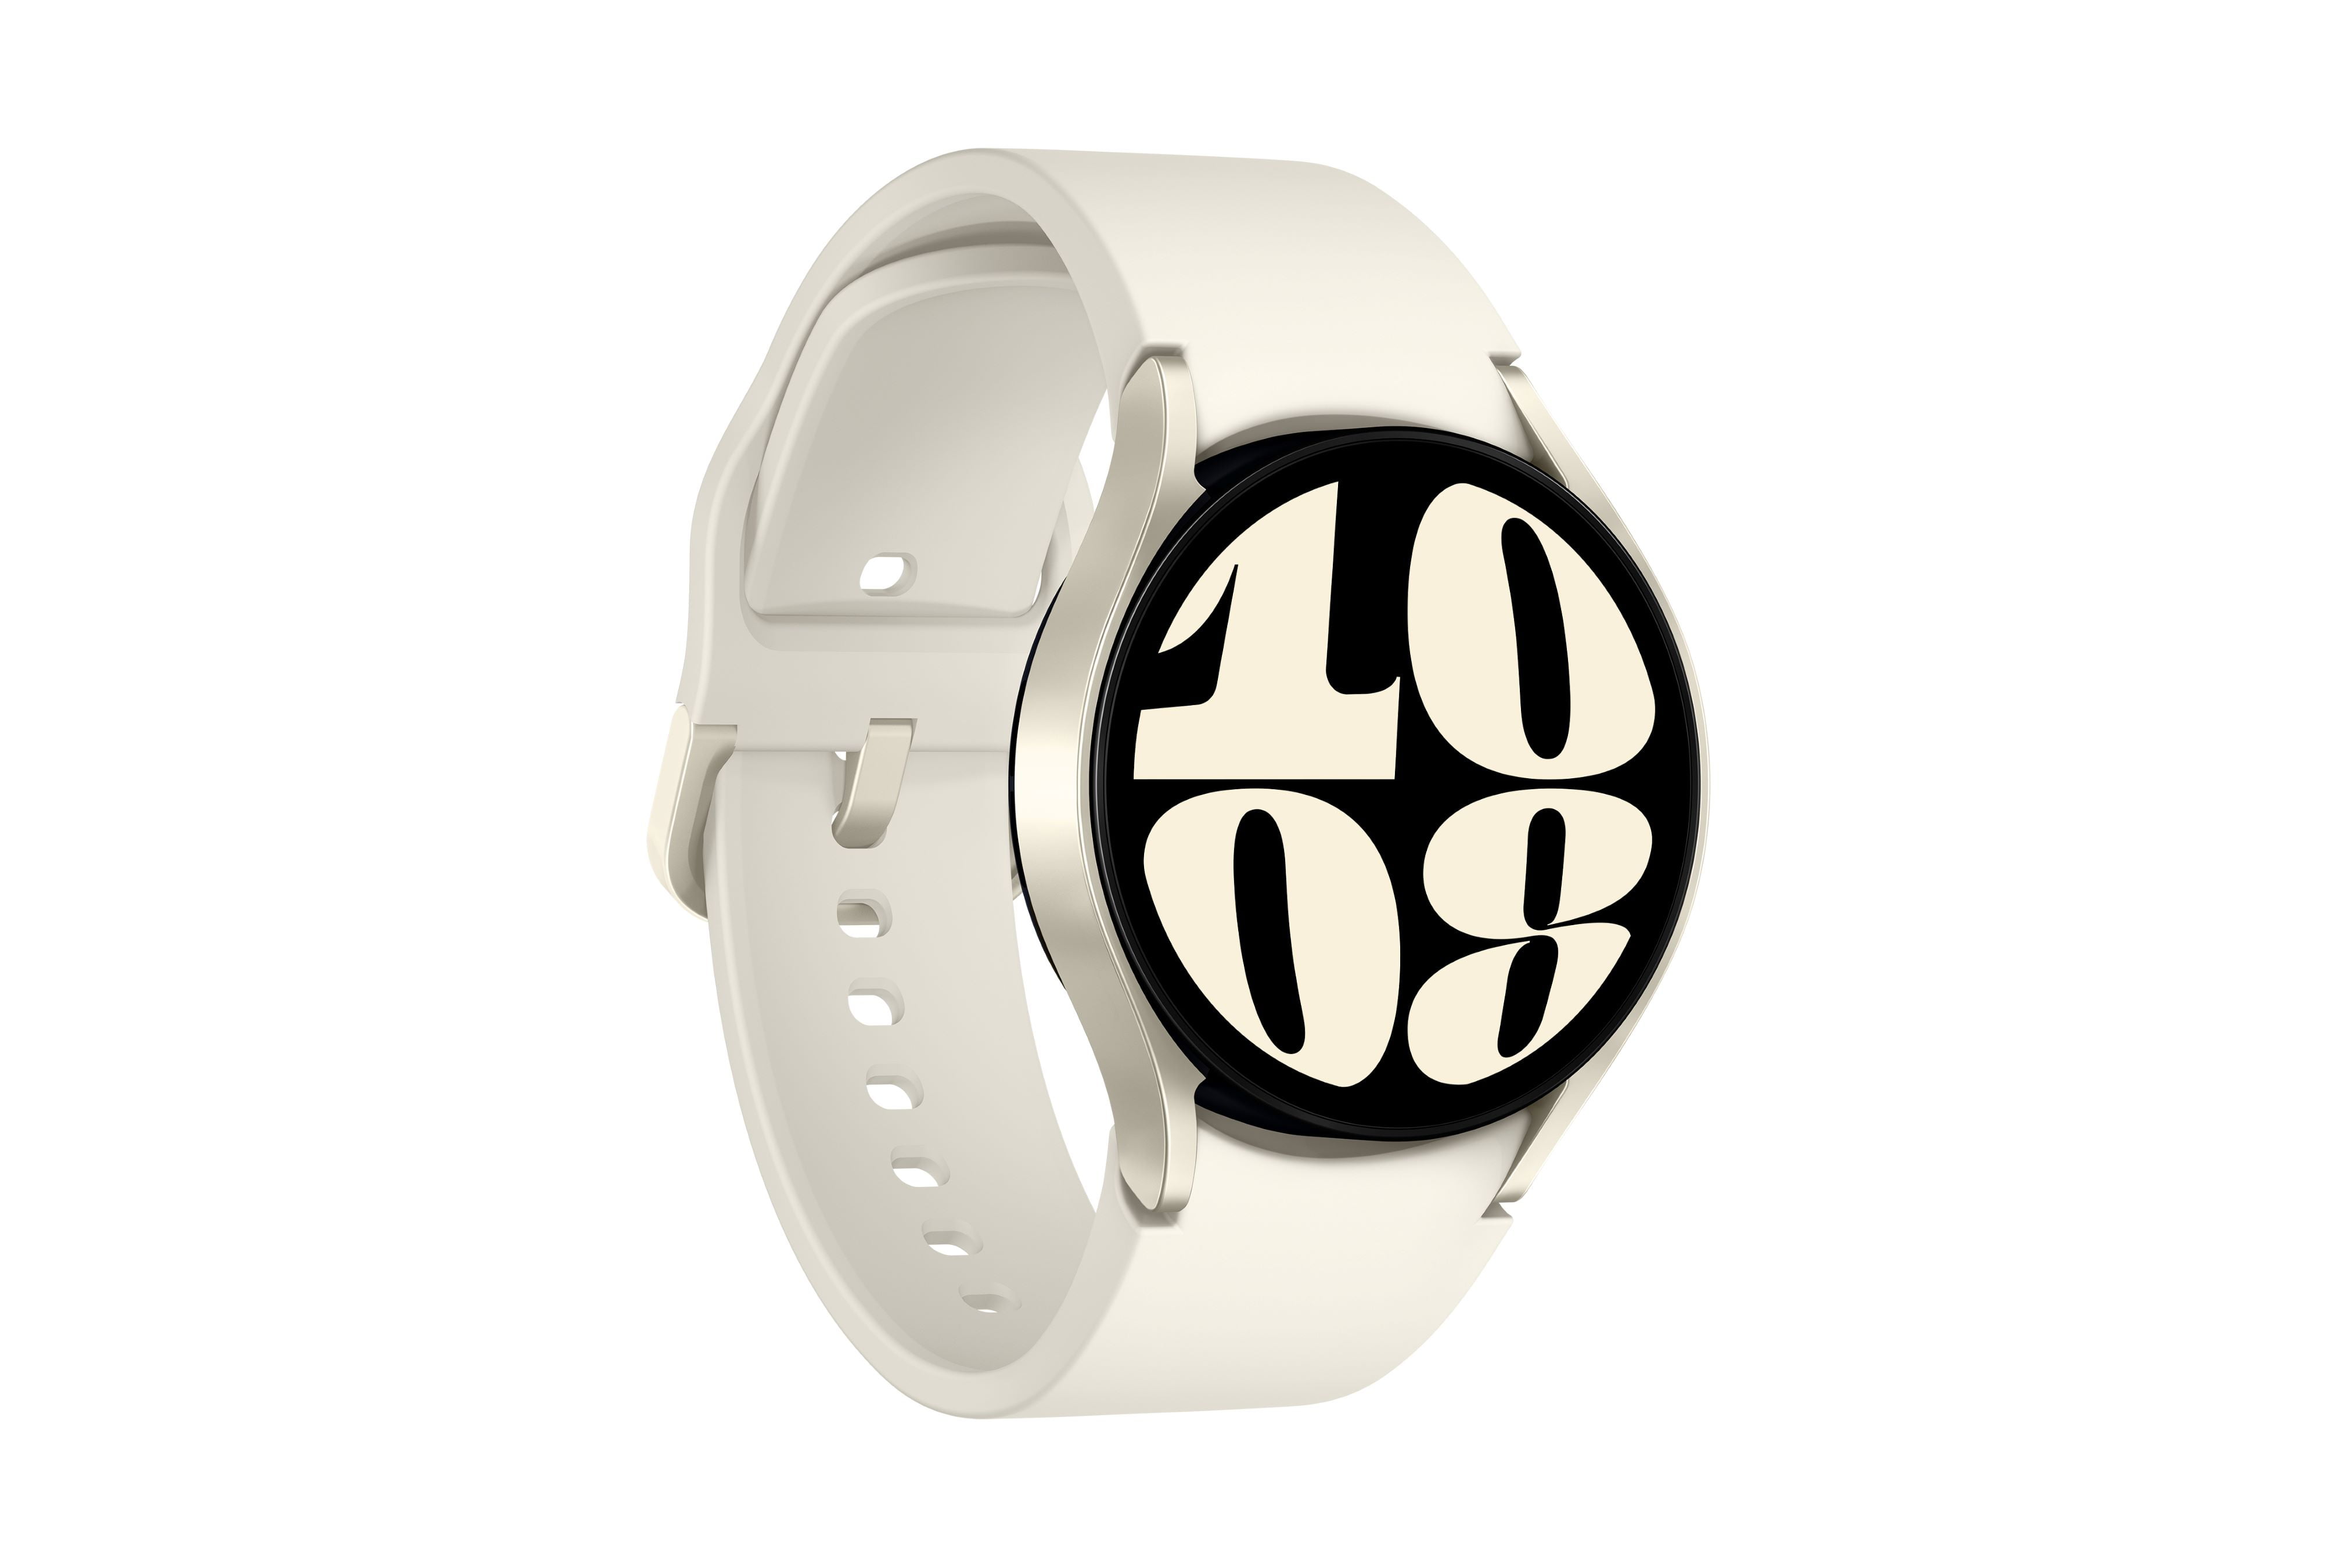 Buy SAMSUNG Galaxy Watch6 BT with Bixby - Graphite, 40 mm